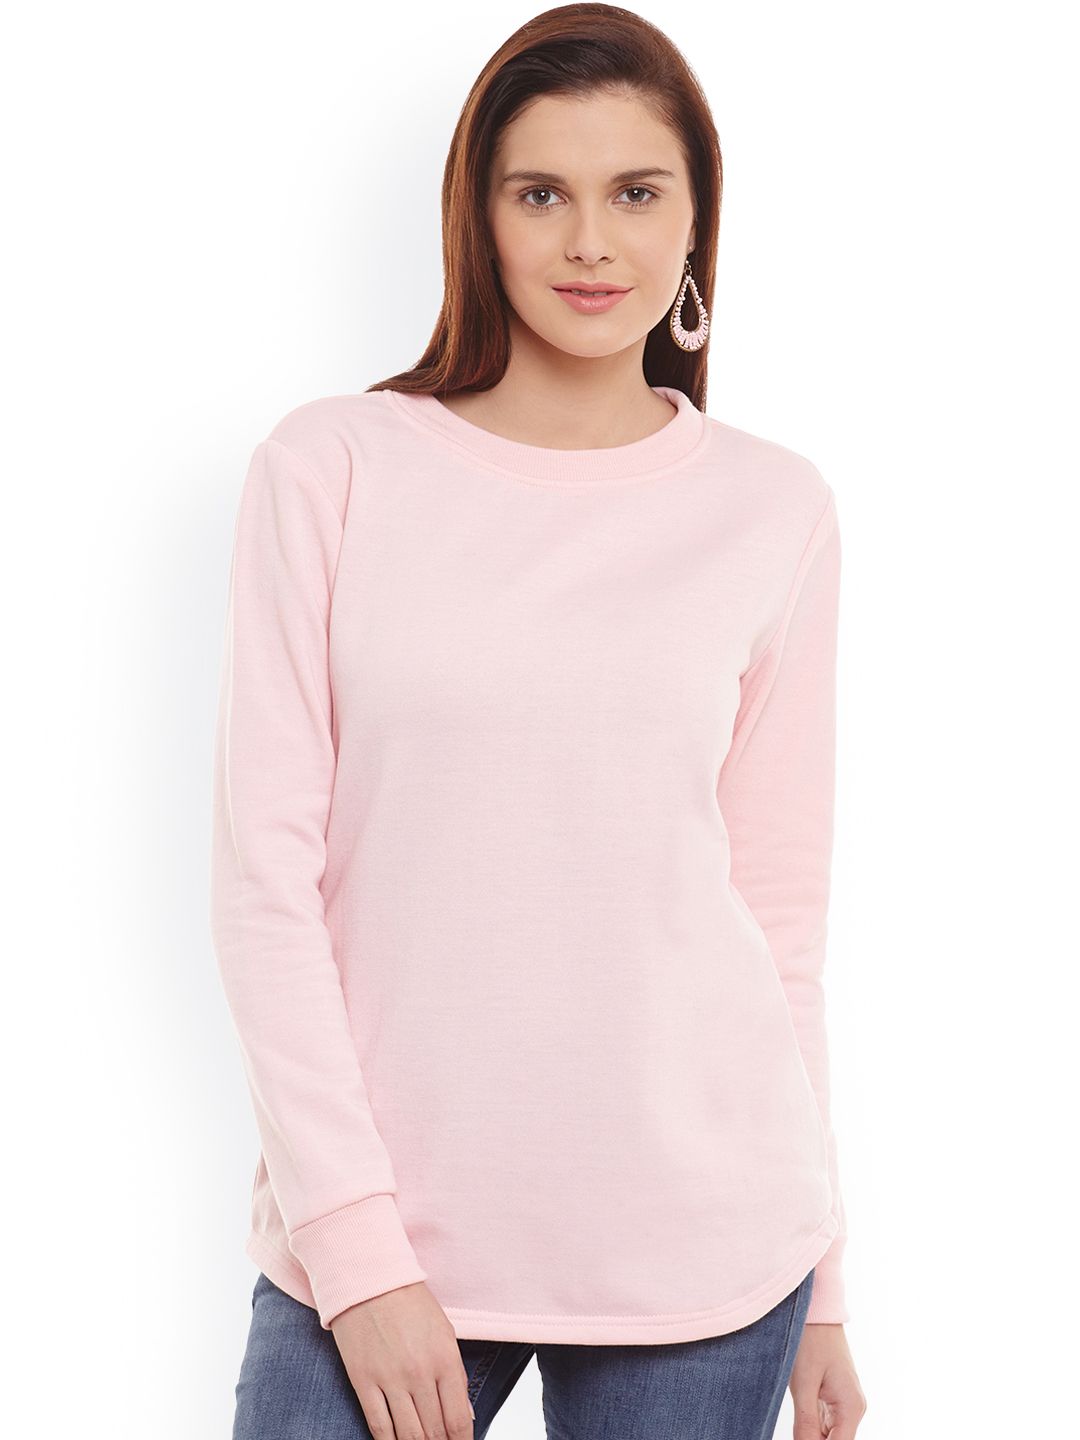 Belle Fille Pink Sweatshirt Price in India